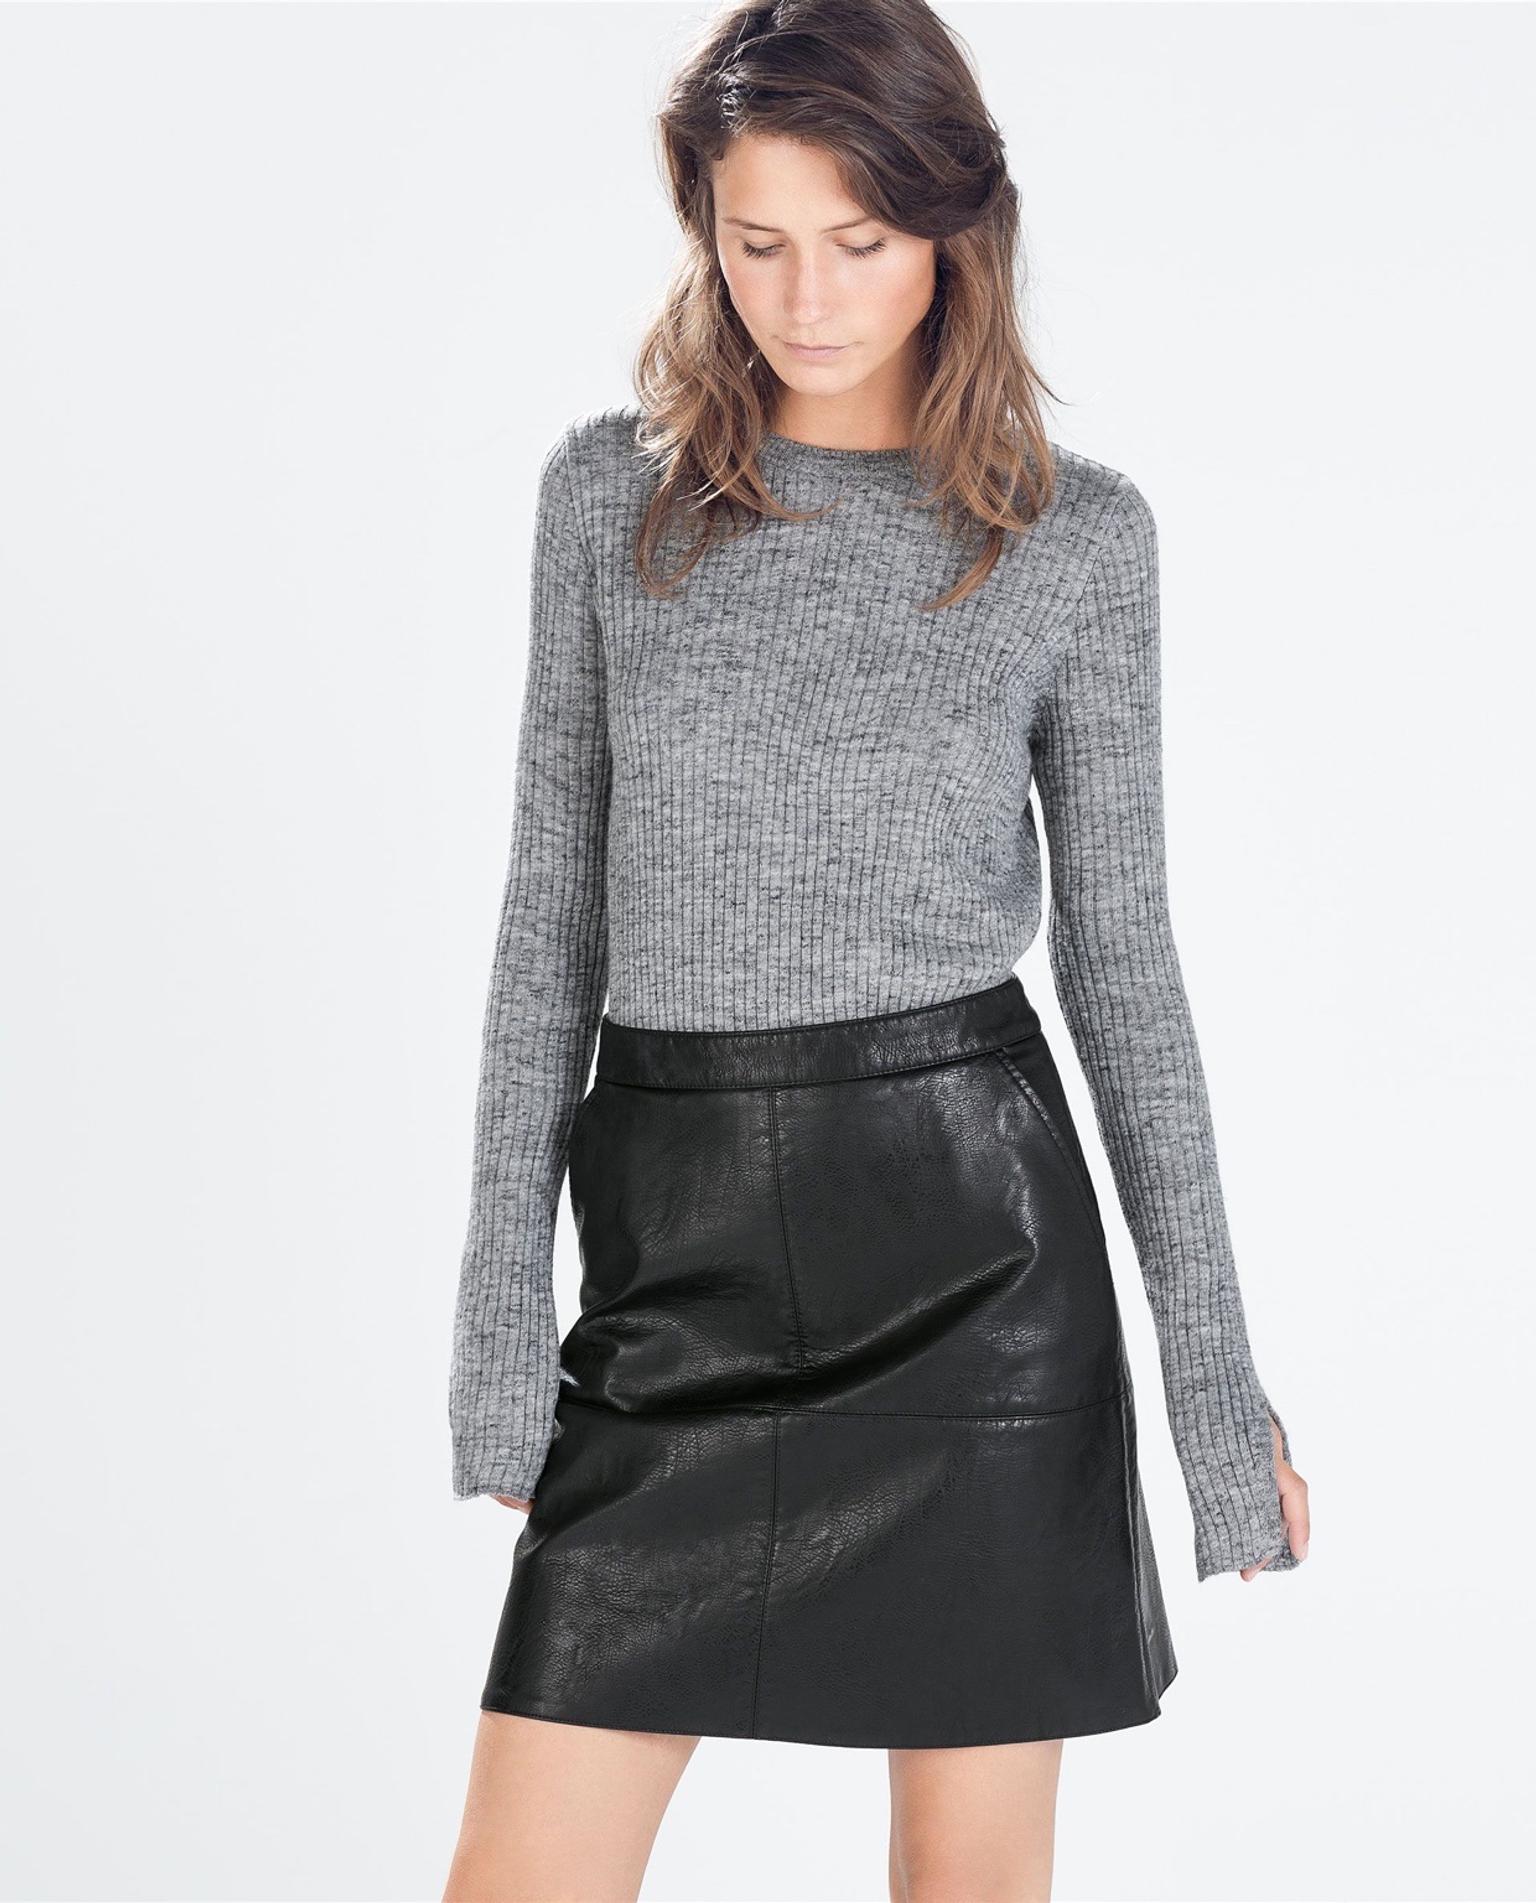 Zara basic leather skirt 8-10 in SW16 